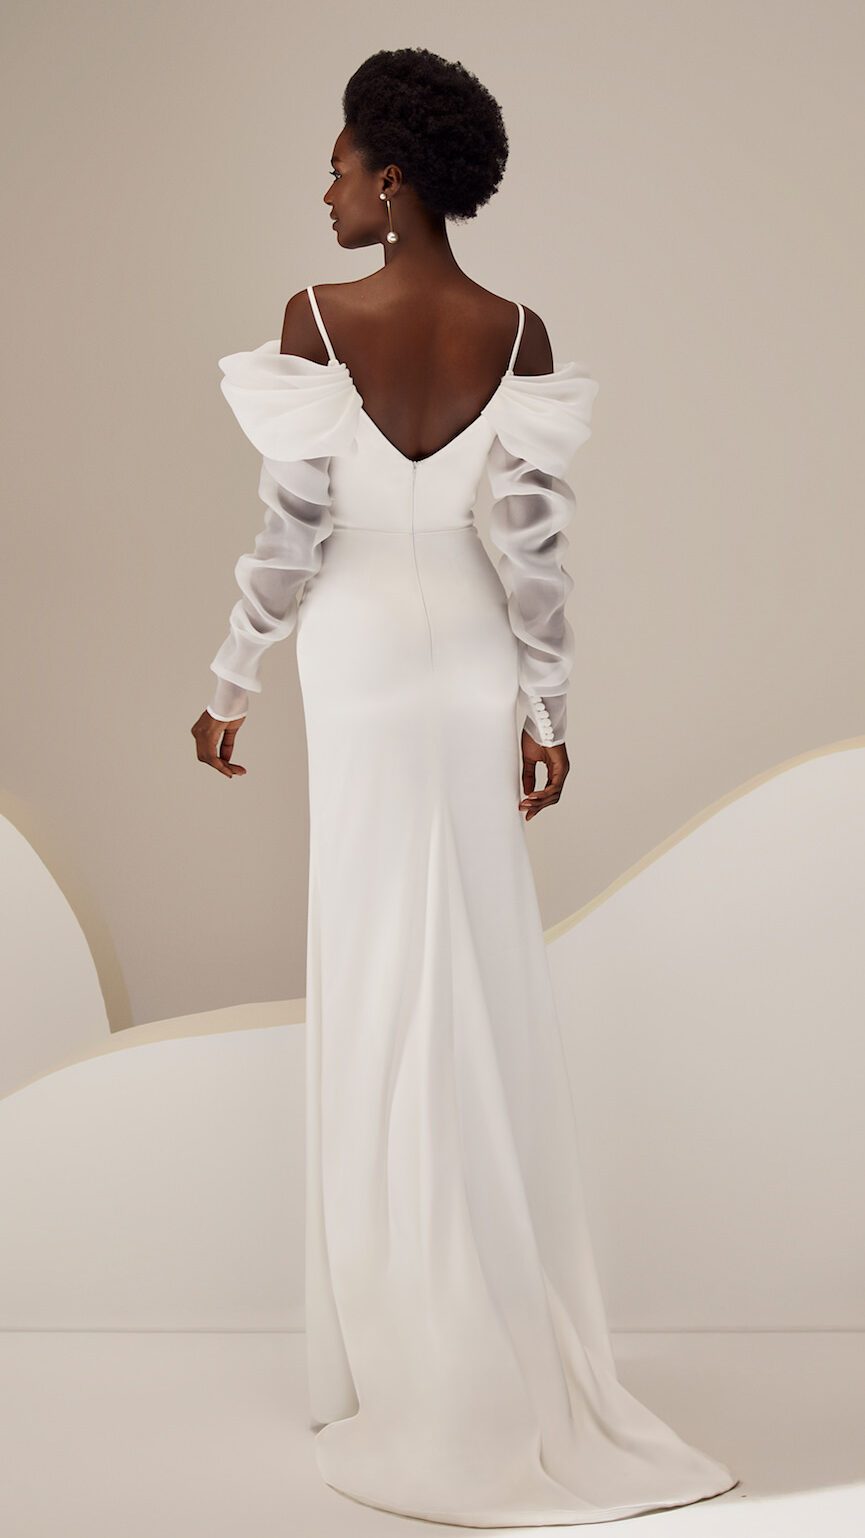 Long Sleeves Modern Wedding Dress by Milla Nova - Ada white lace